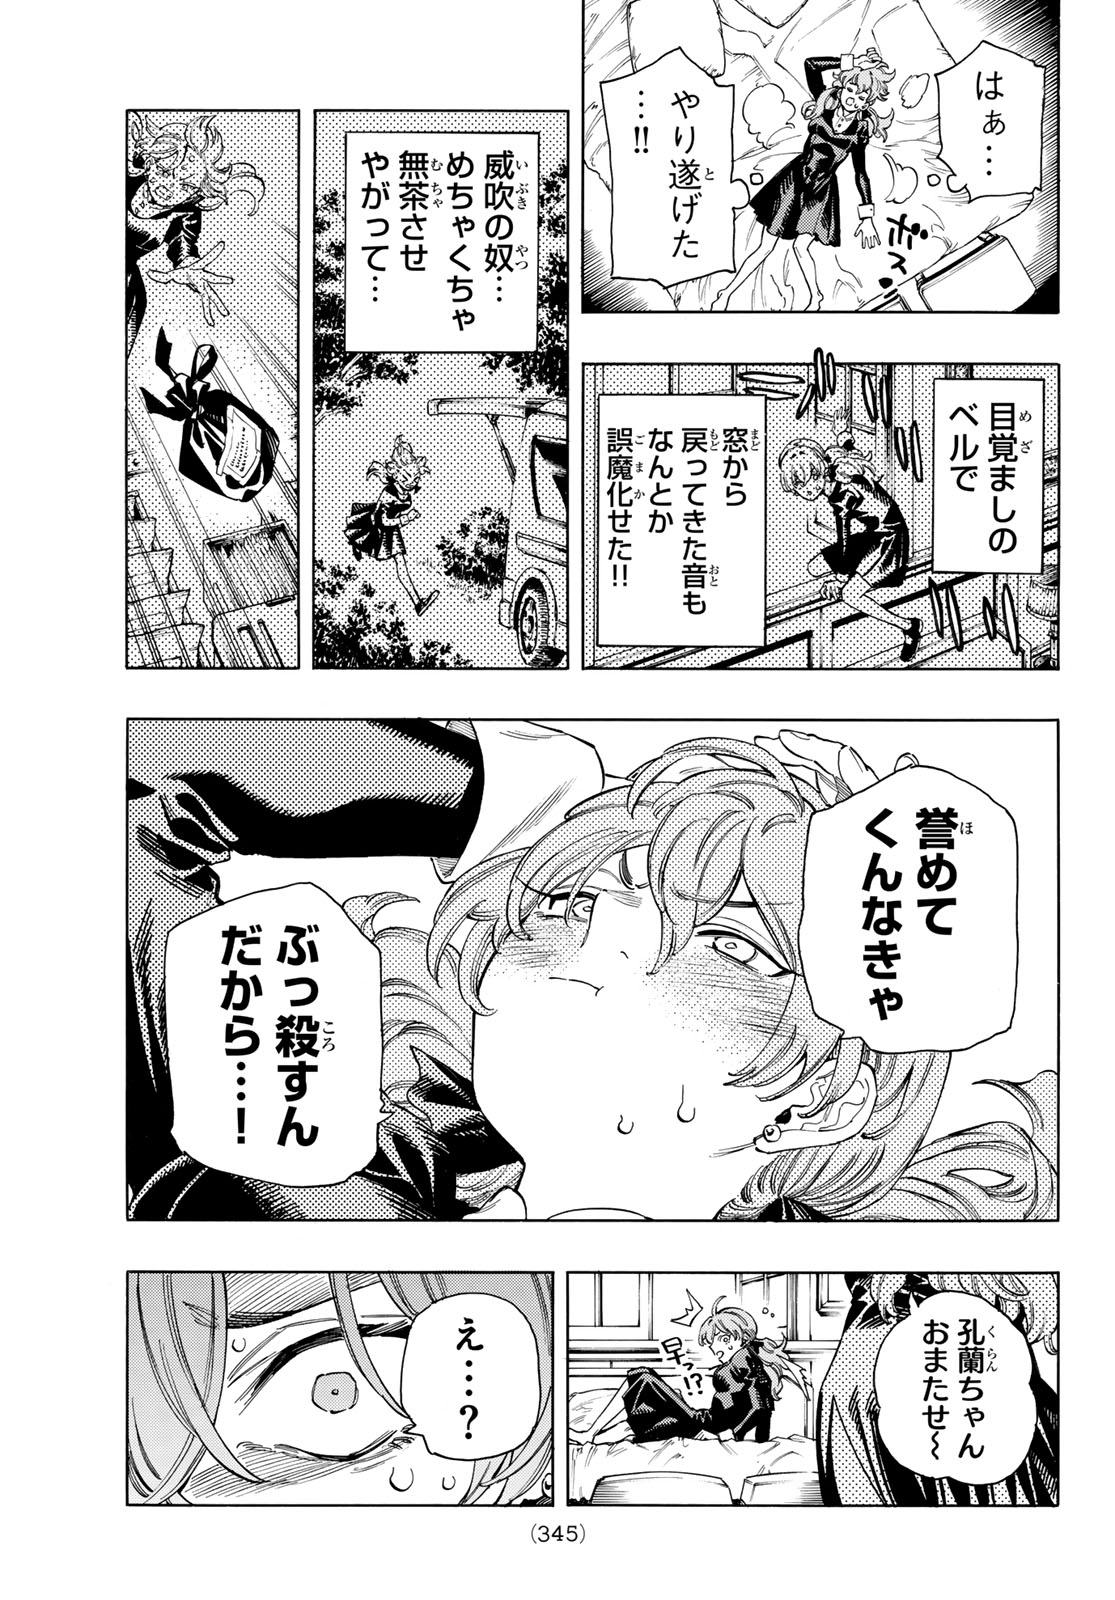 Akabane Honeko no Bodyguard - Chapter 71 - Page 19